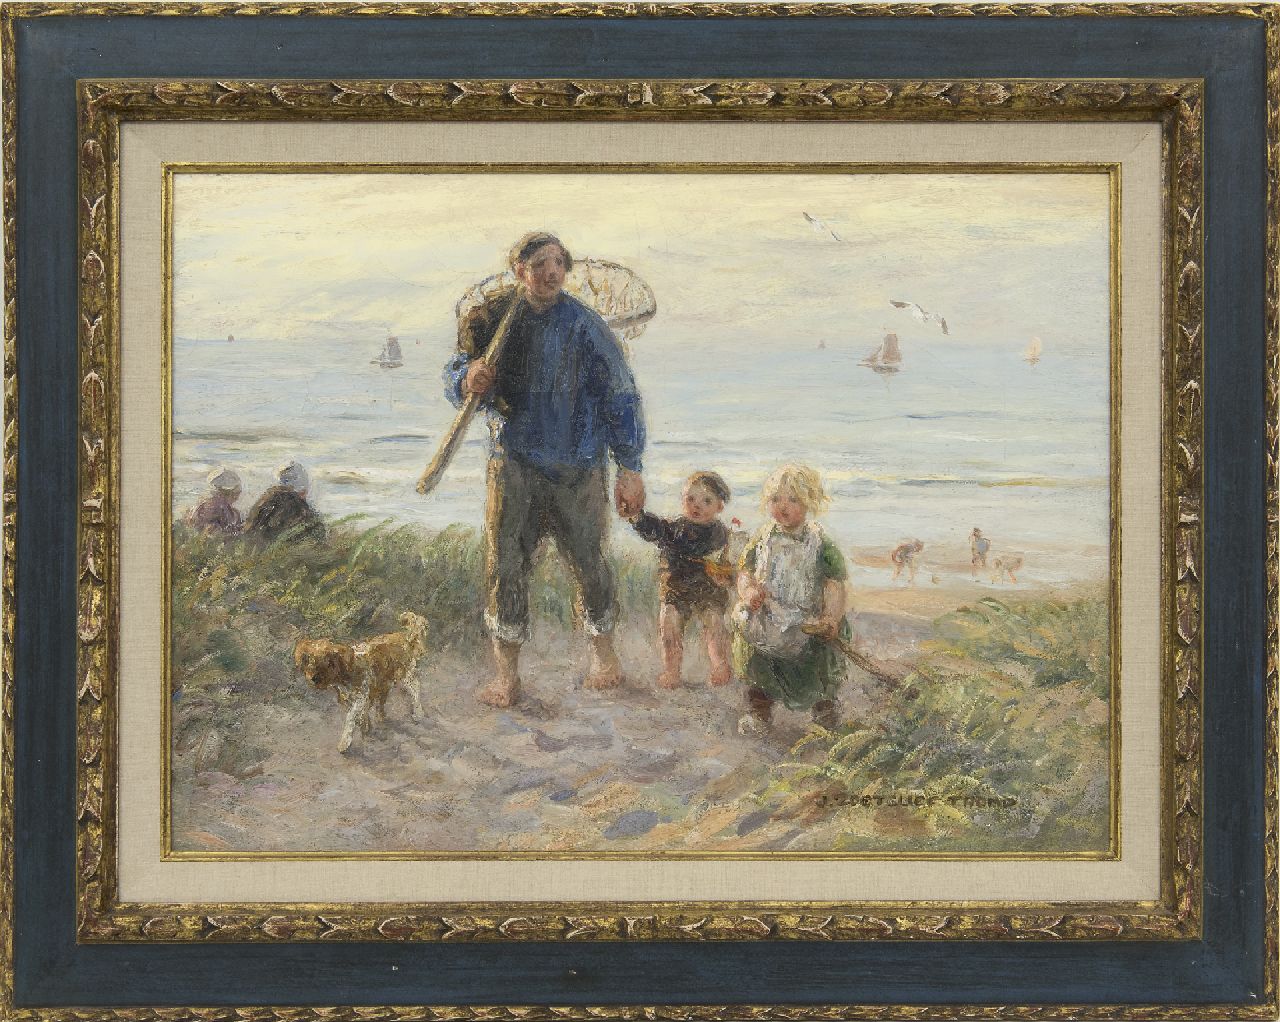 Zoetelief Tromp J.  | Johannes 'Jan' Zoetelief Tromp | Paintings offered for sale | Homeward bound through the dunes, oil on canvas 41.0 x 56.2 cm, signed l.r.